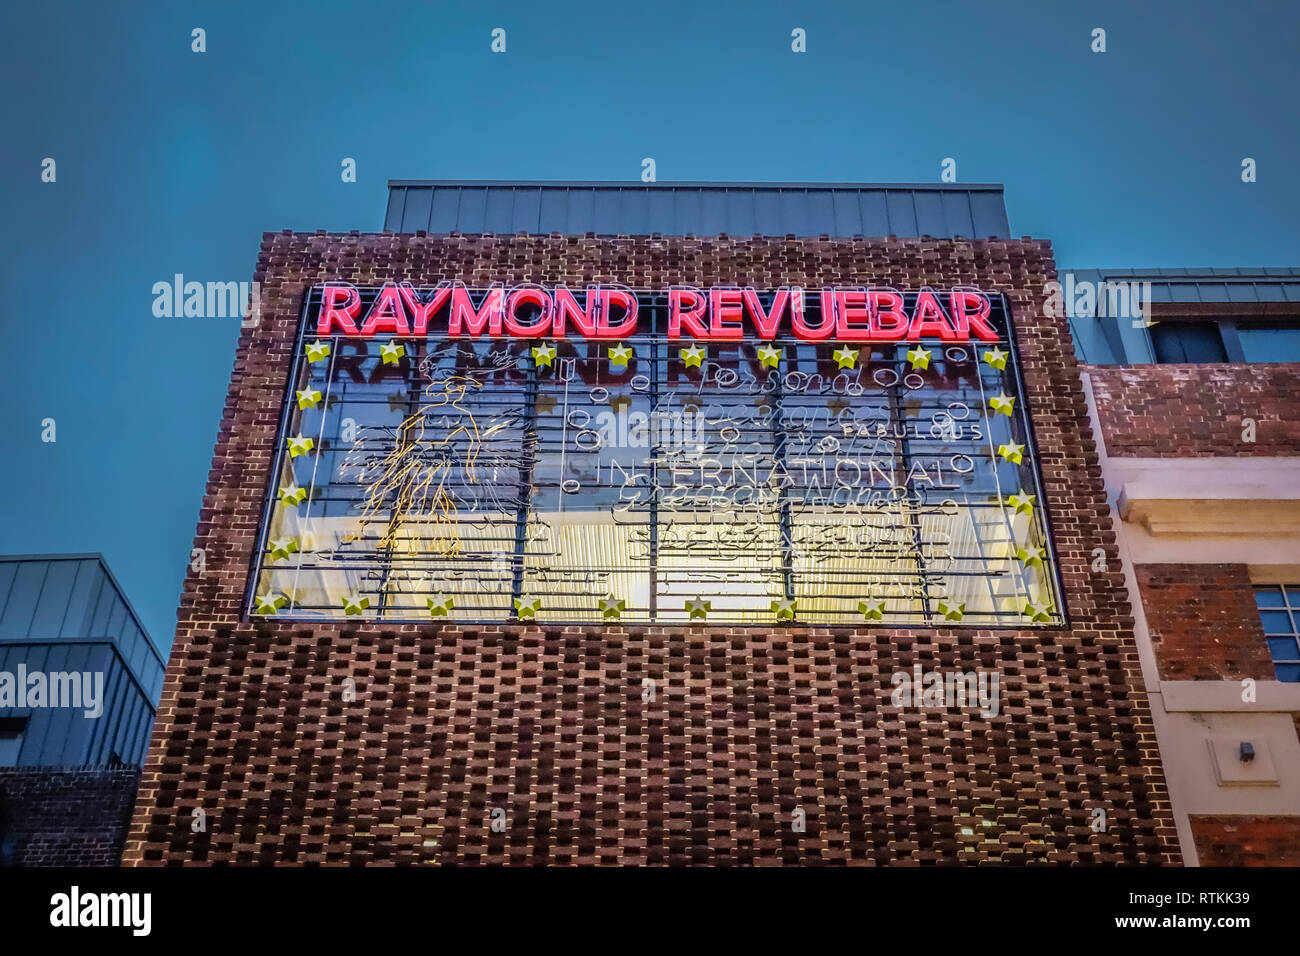 Illuminated neon sign outside the former Raymond Revue bar on Brewer Street, Soho, Central London, England, U.K. Stock Photo